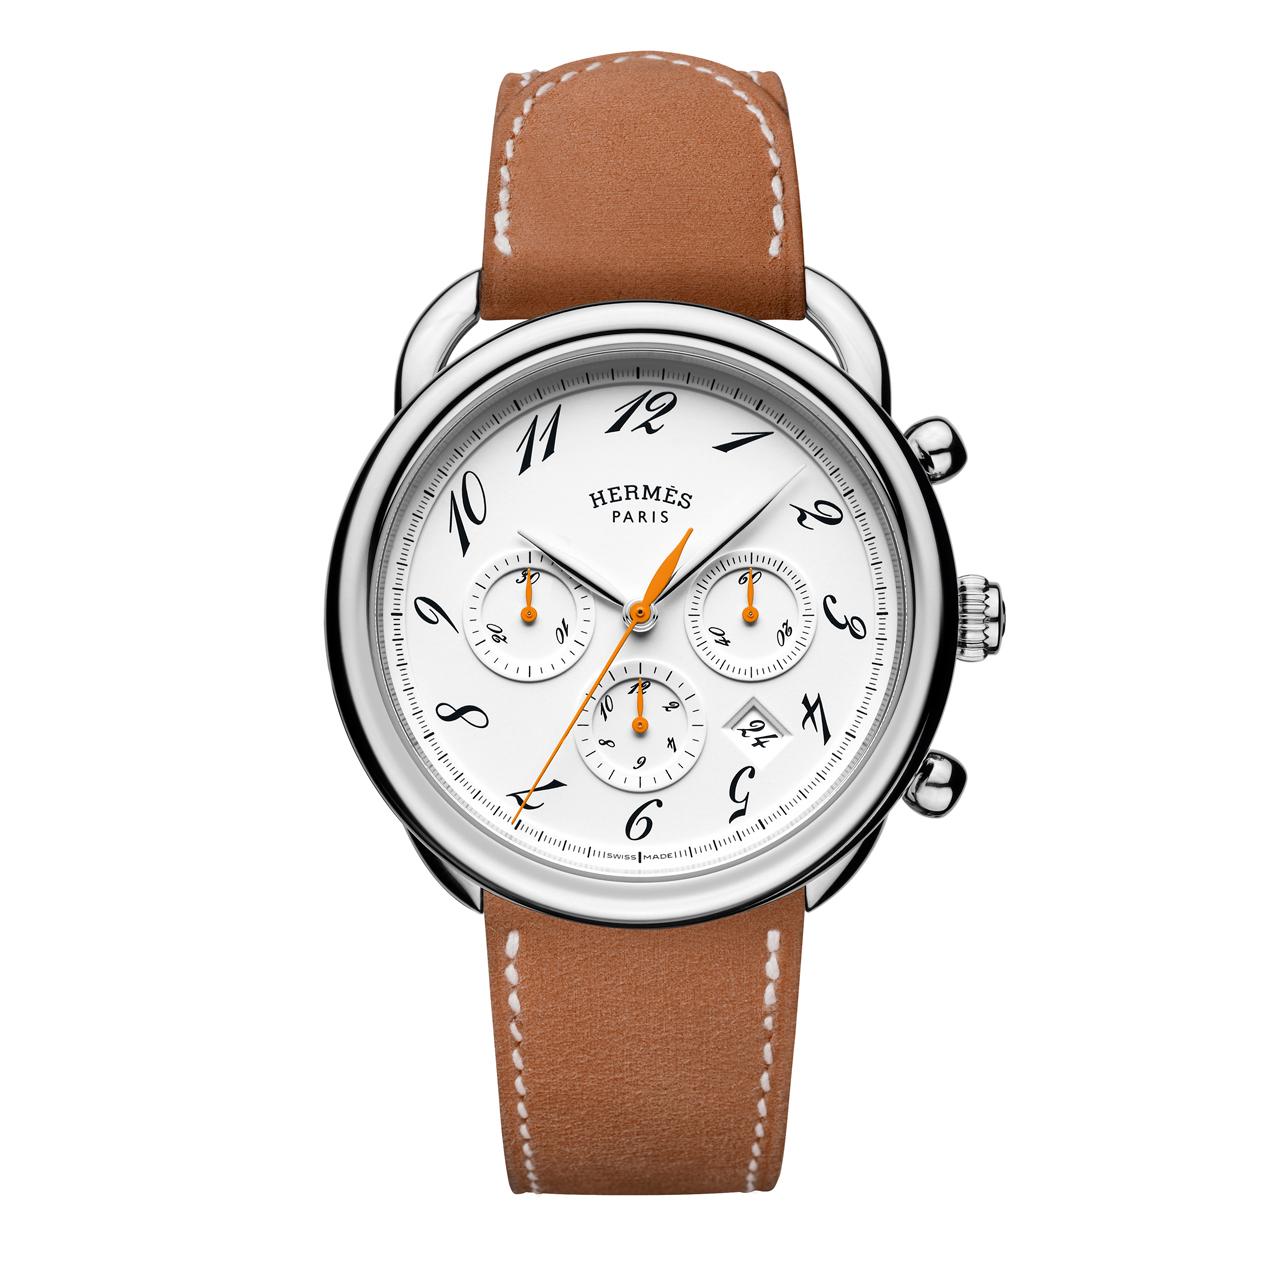 Contemporary Hermes Watch Hermes Arceau Chronograph Model#AR4.910.132/INA2